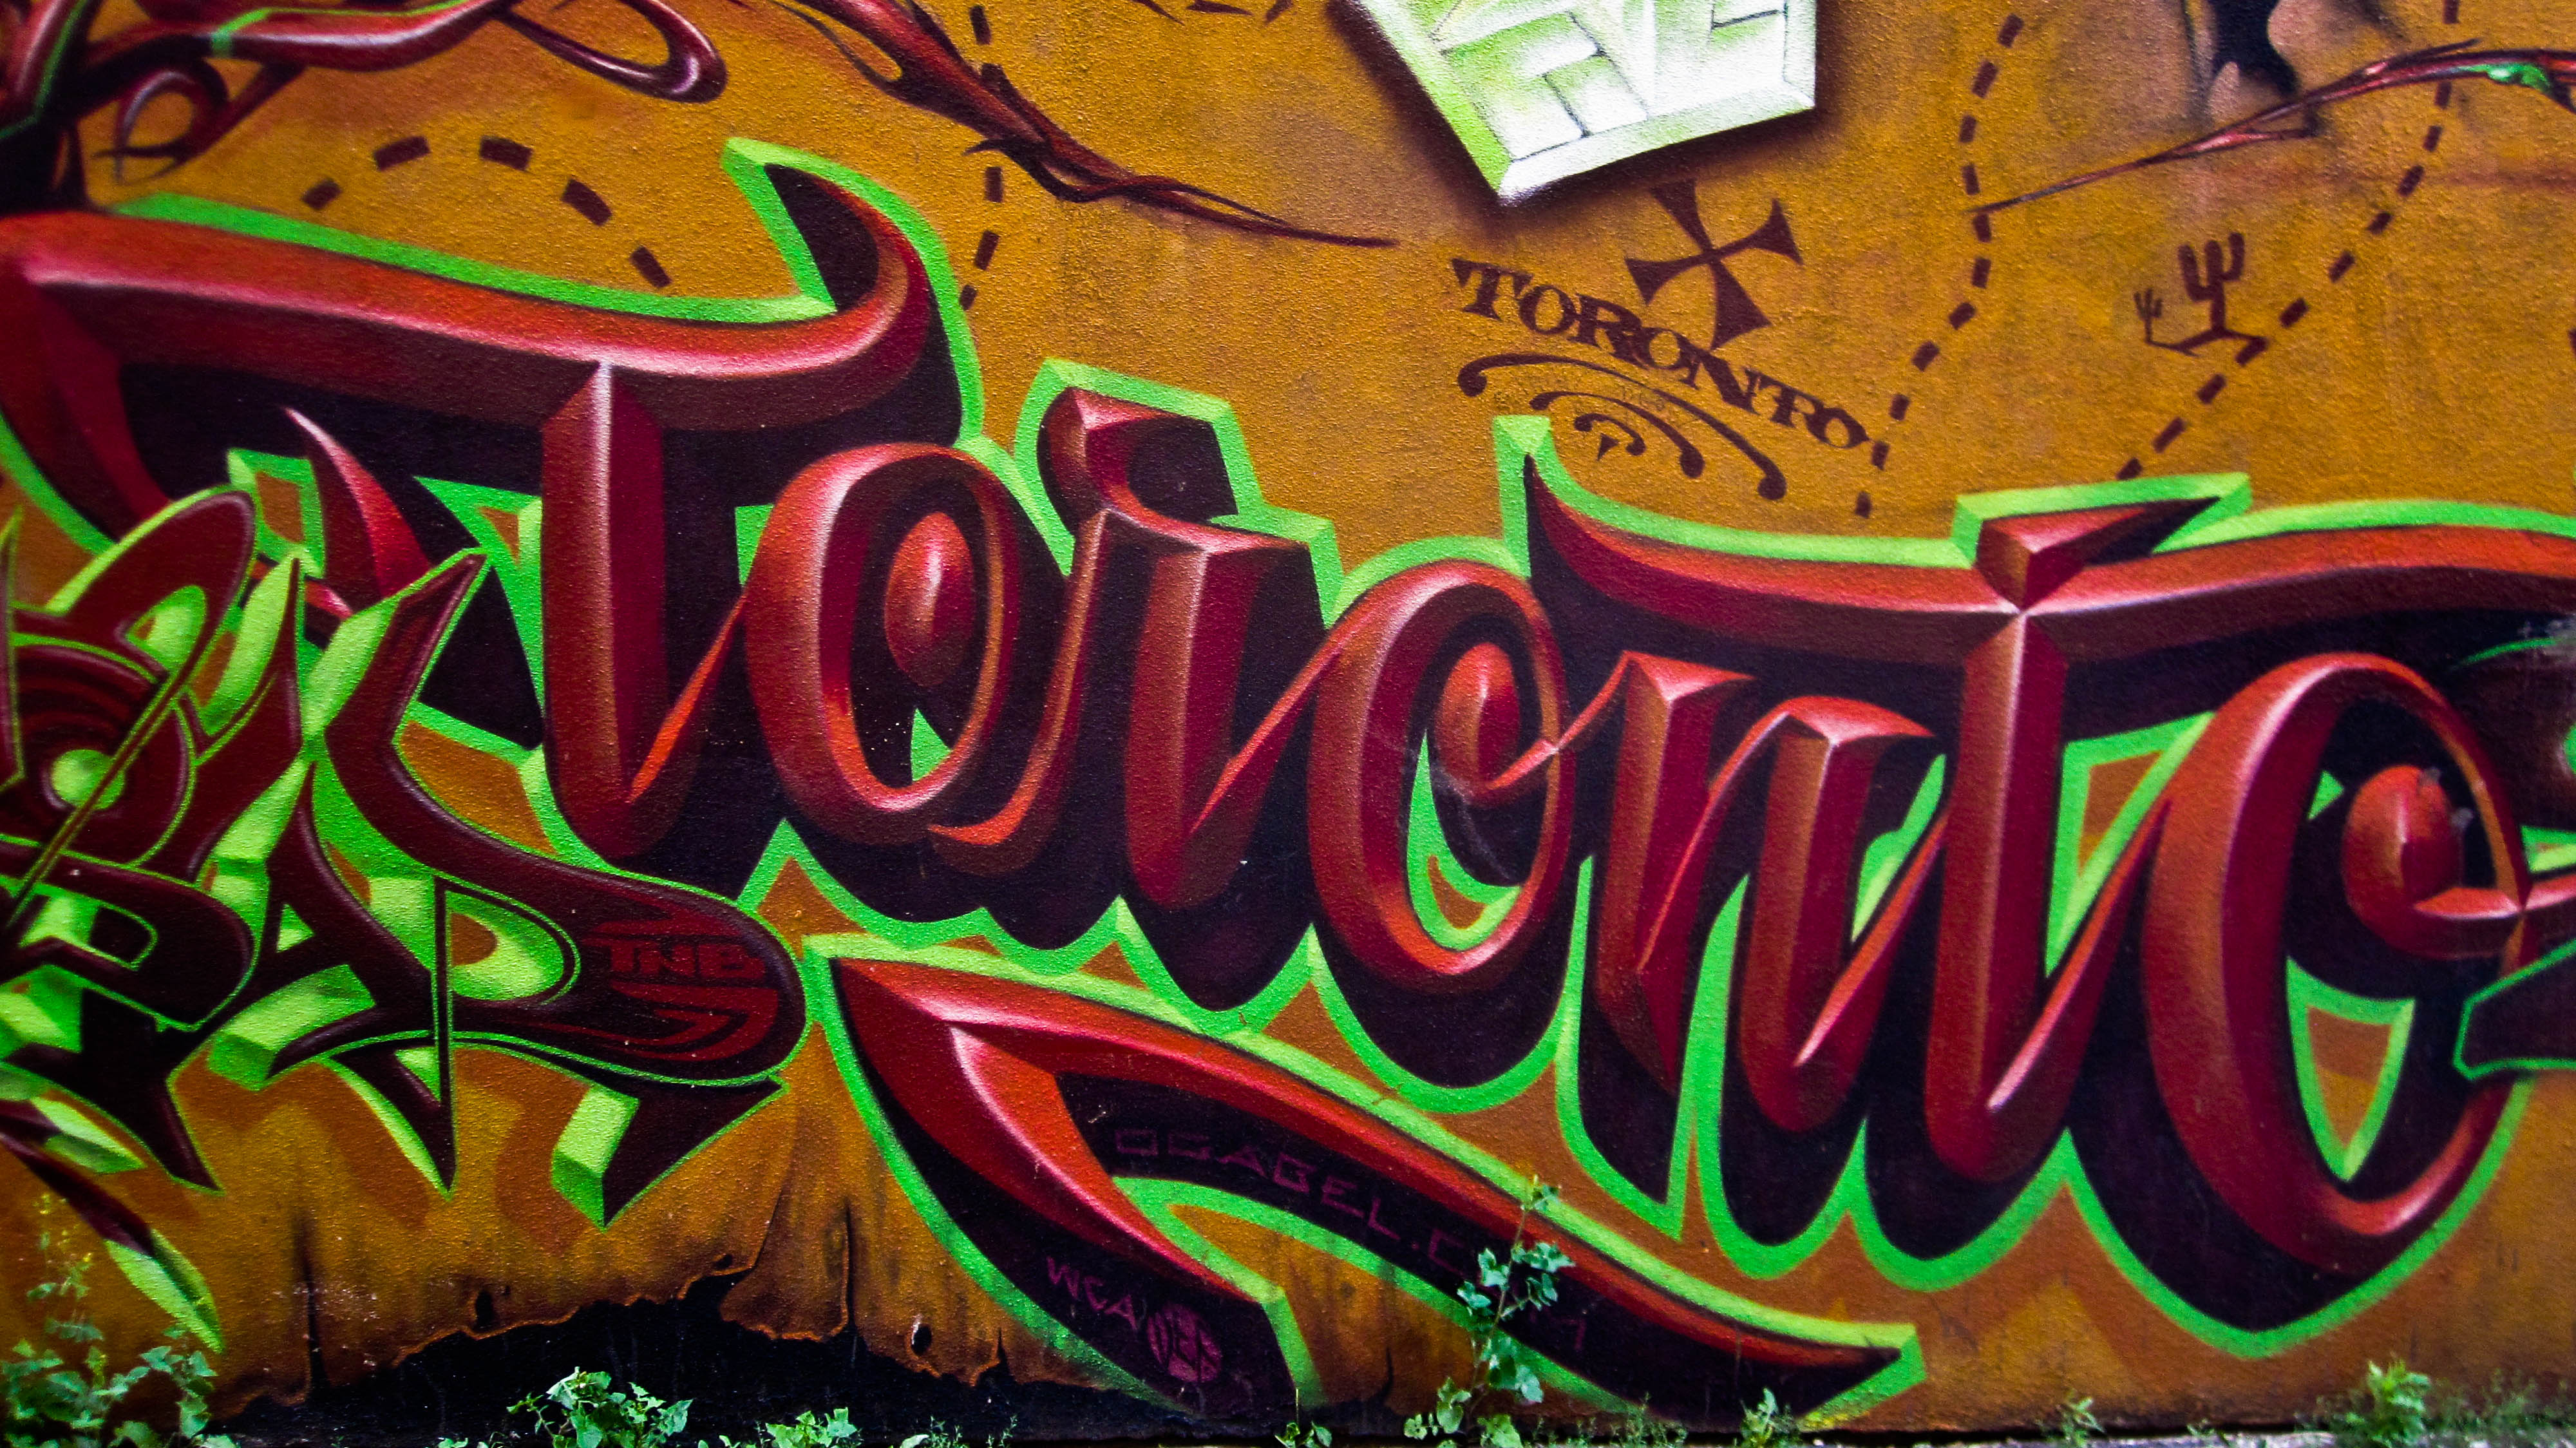 Toronto Street Art: A Fortunate Stopover - Trading Voyageur